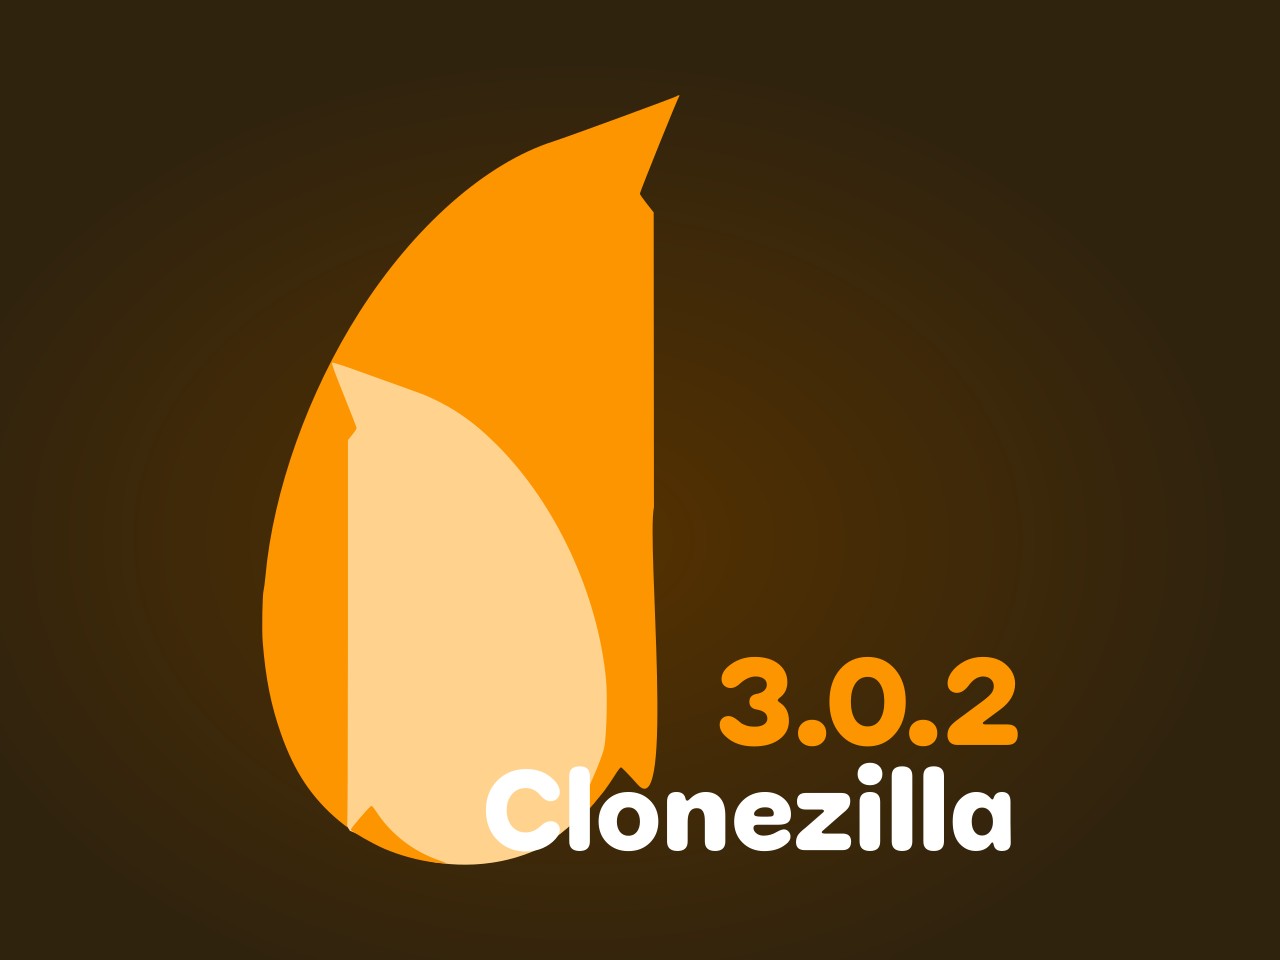 Clonezilla Live 3.1.1-27 download the new